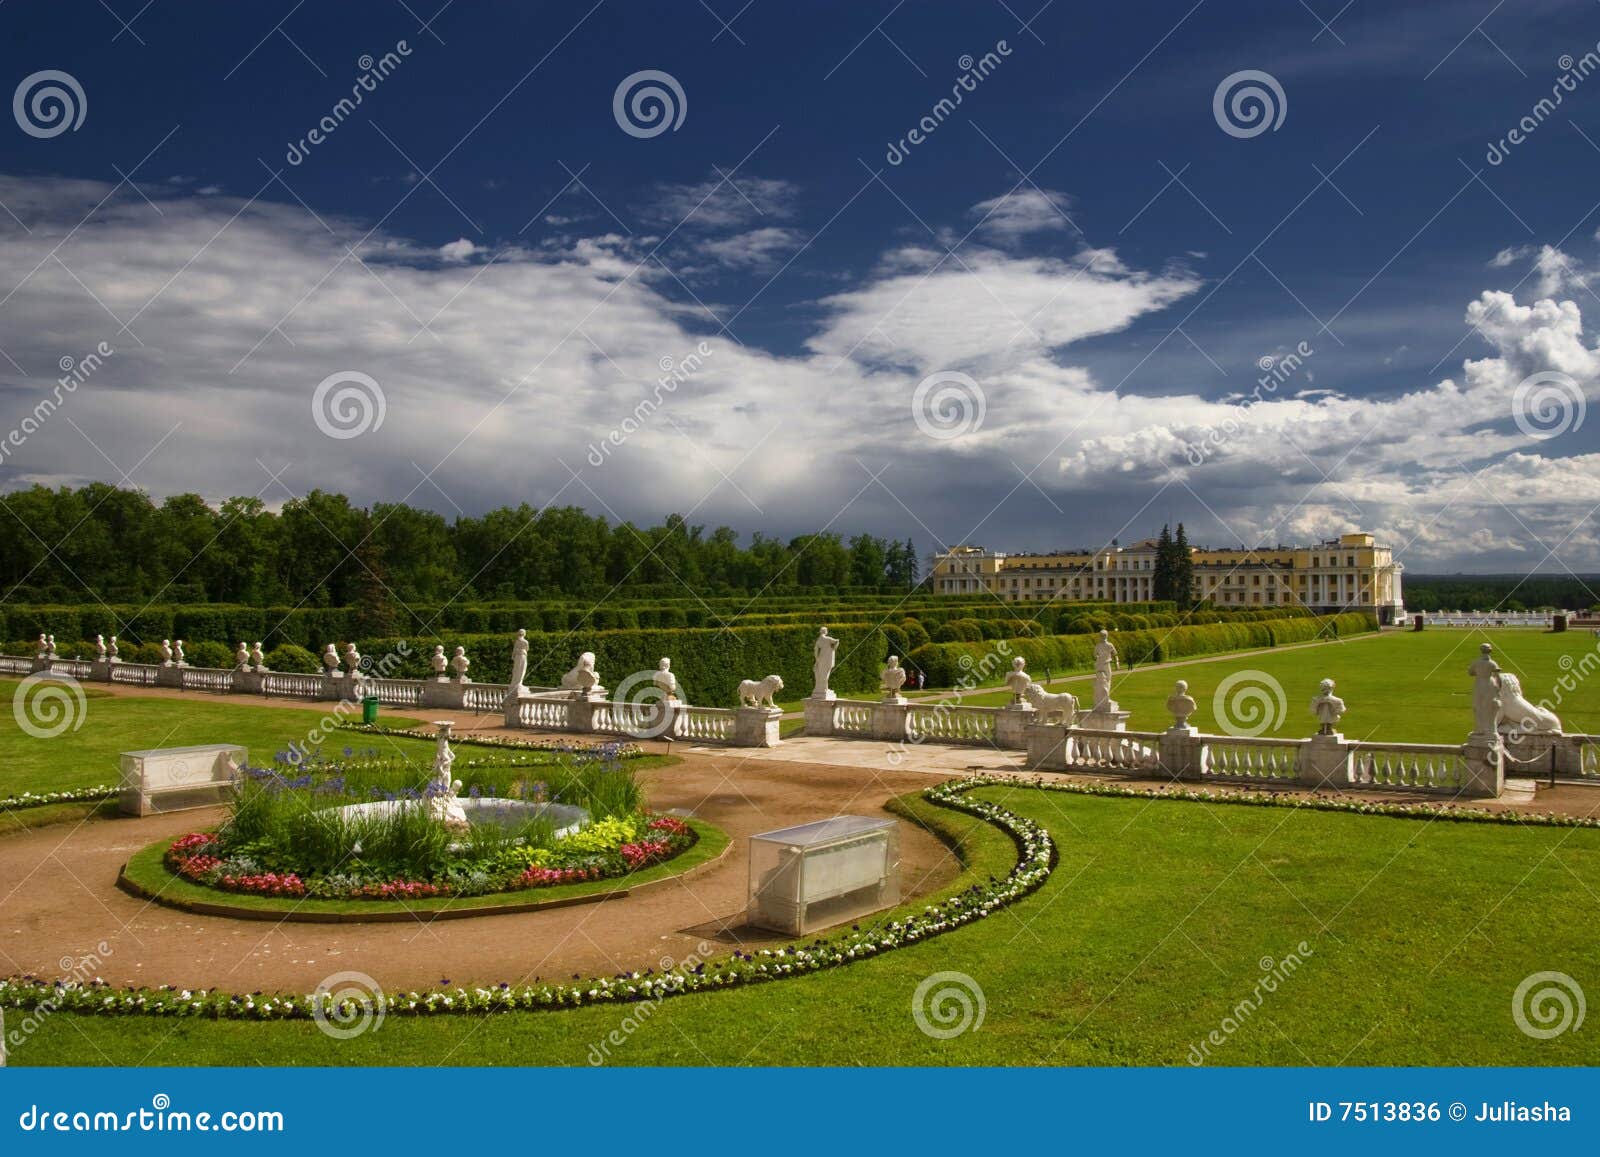 Arkhangelskoye estate stock photo. Image of plants, journey - 7513836